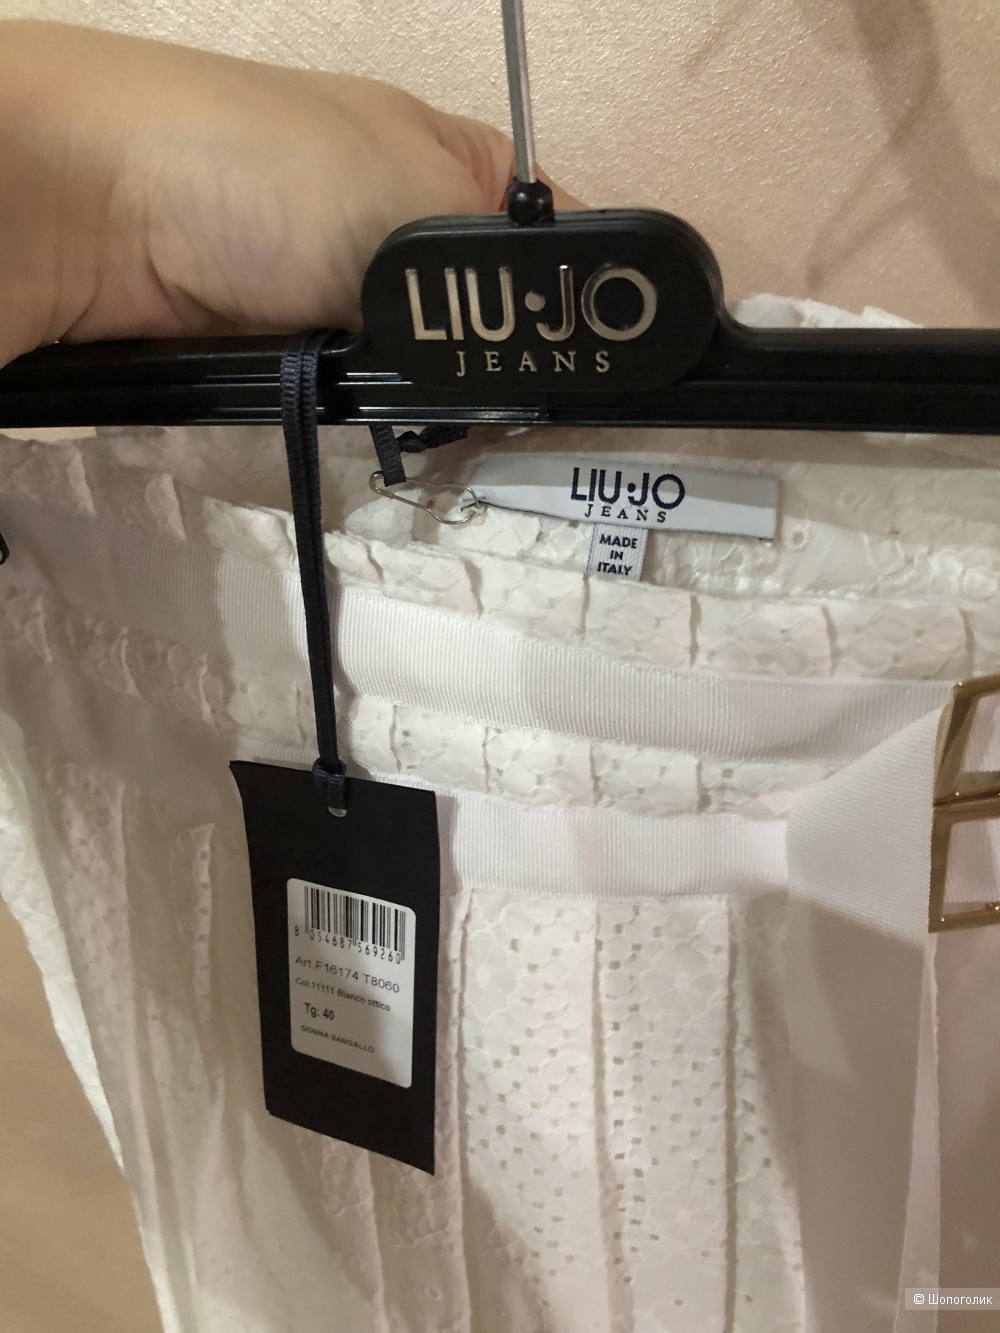 Liu Jo юбка, 44 размер